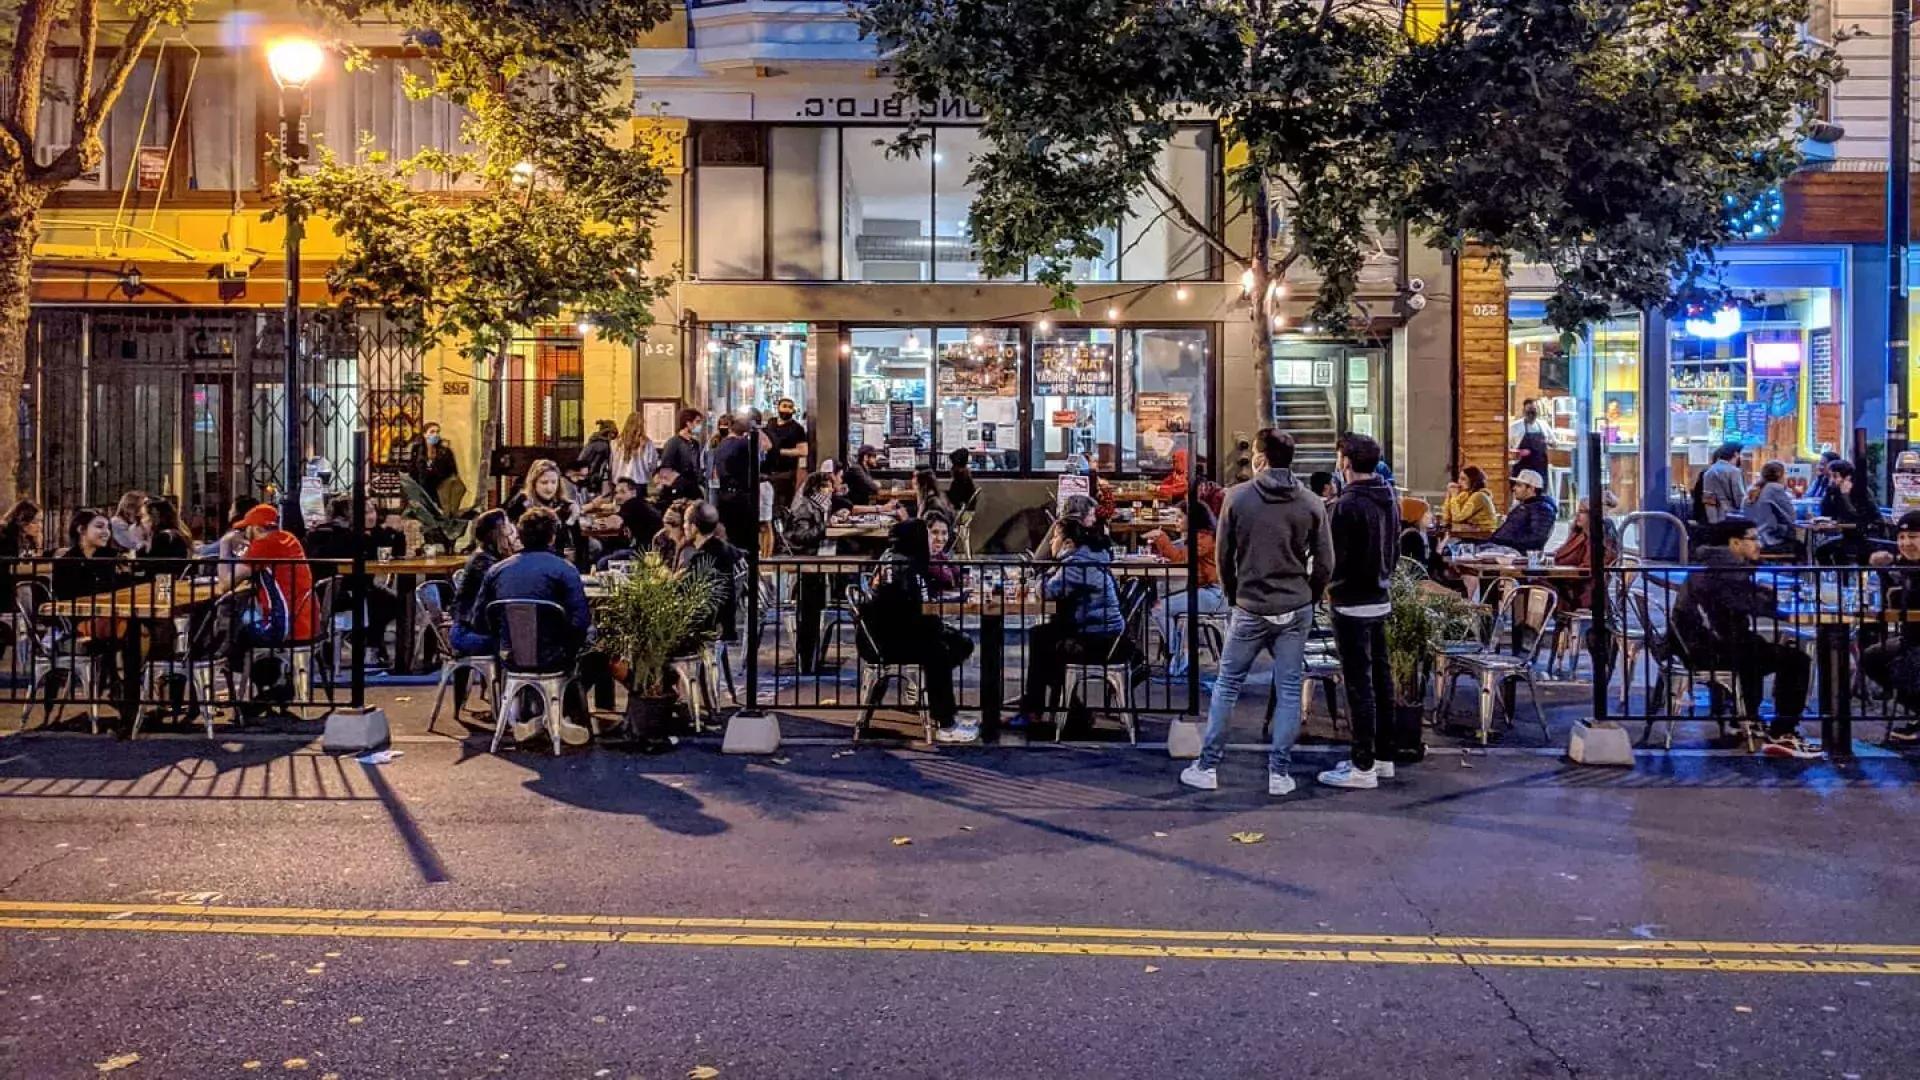 A crowd enjoys food 和 drink along San Francisco's Valencia Street